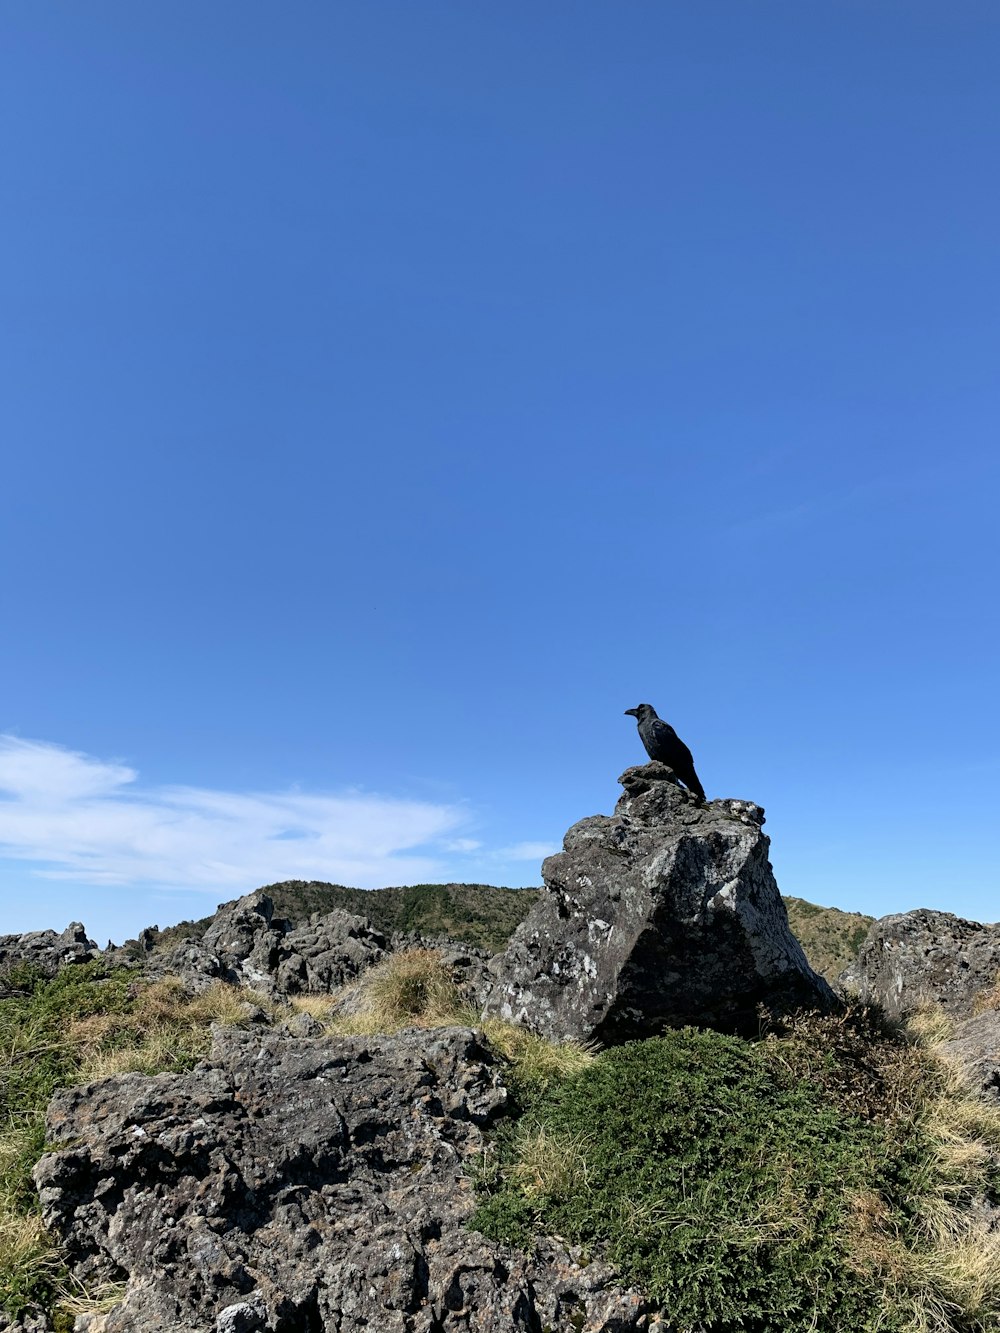 black bird on gray rock formation under blue sky during daytime